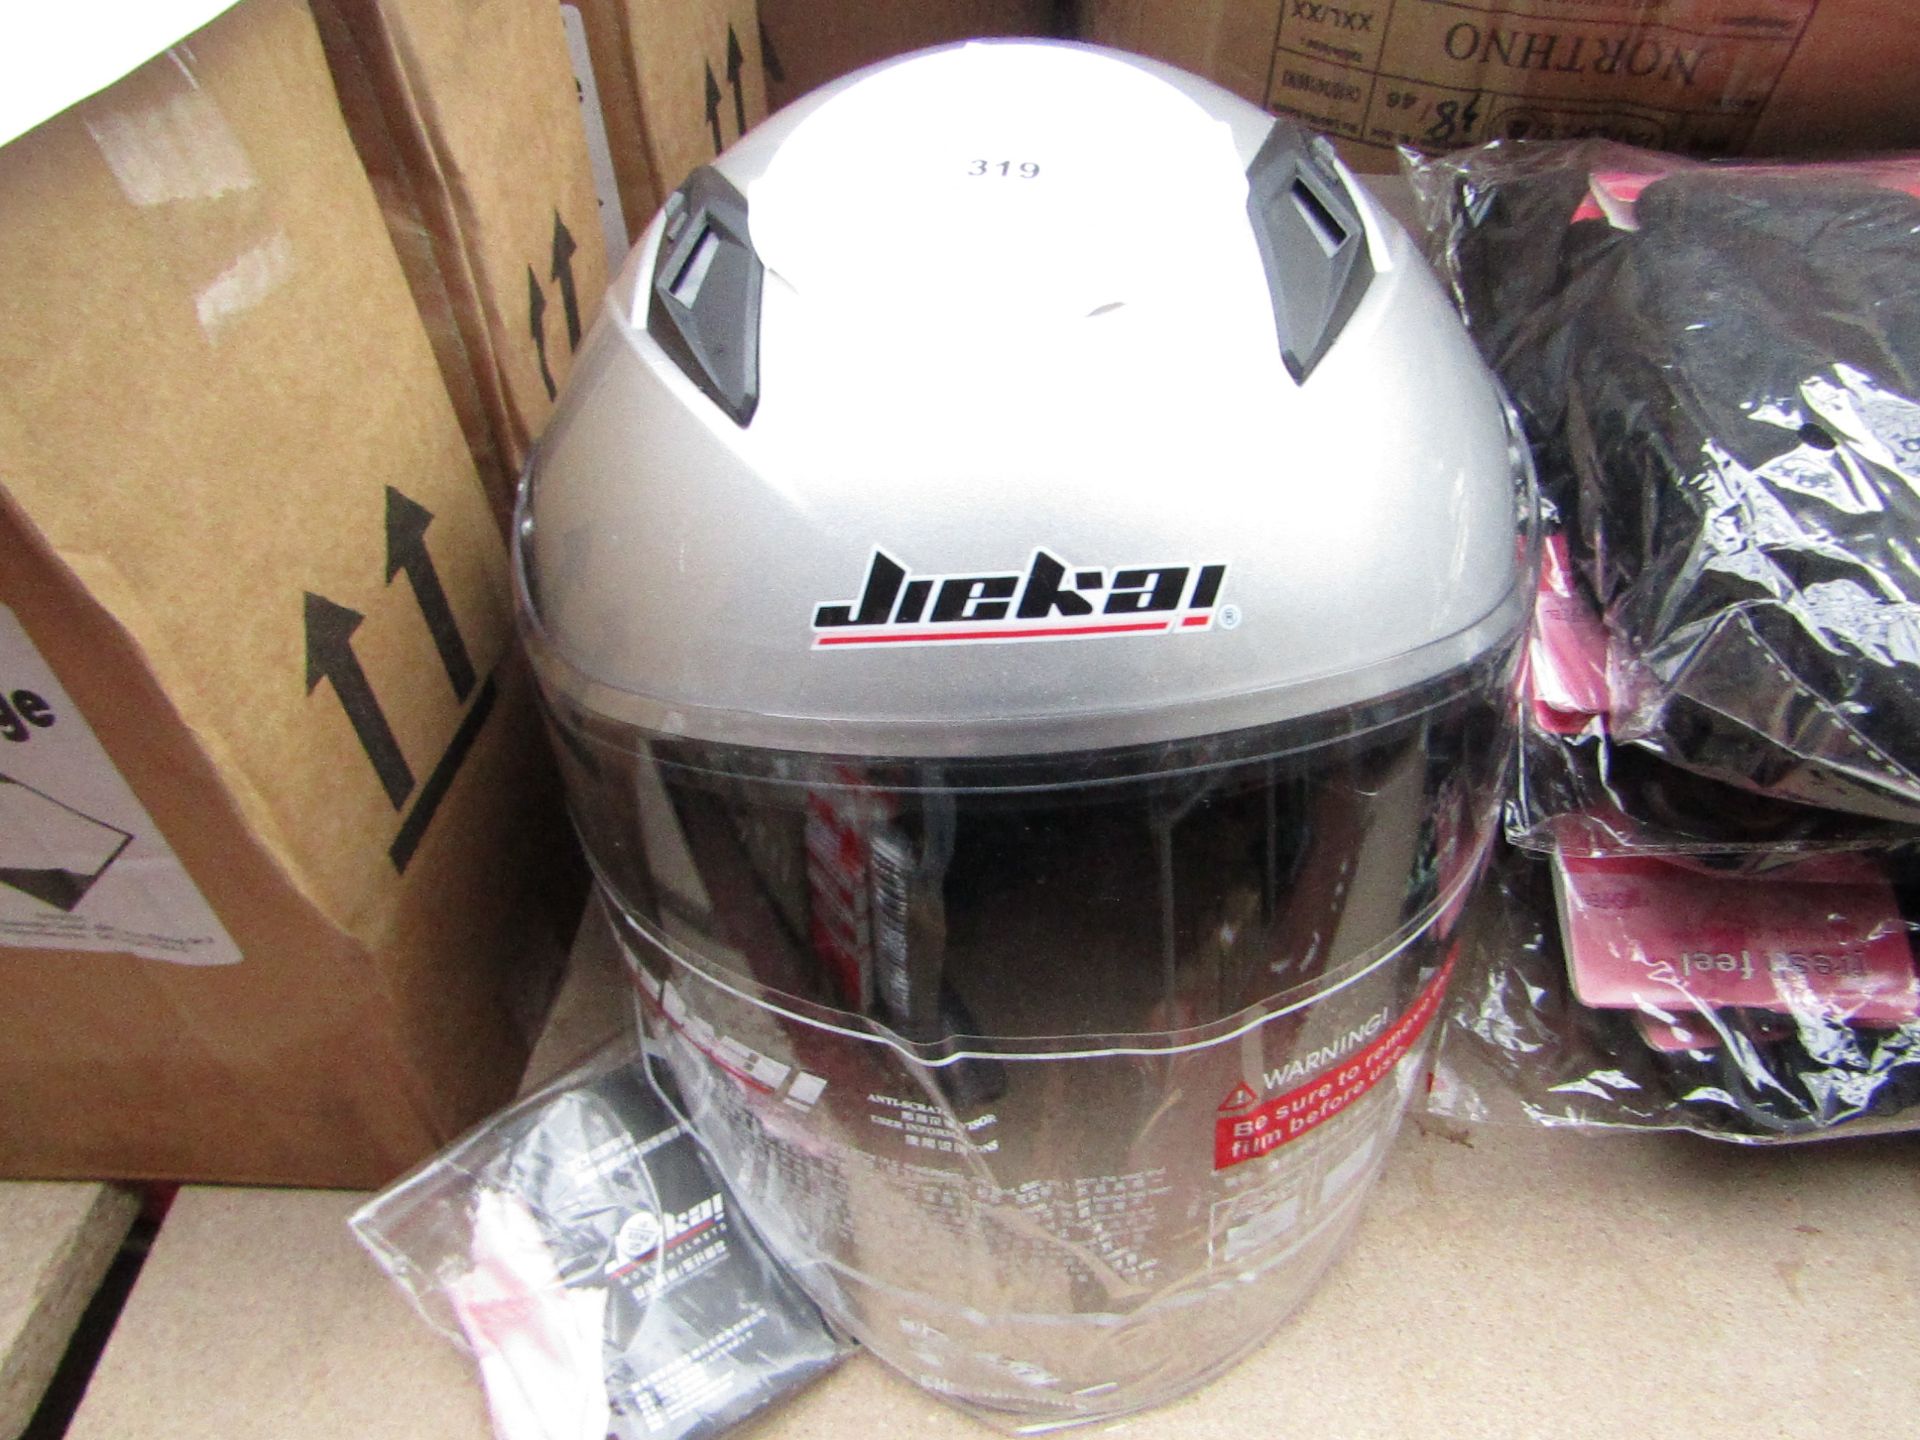 JIEKAI - Motor Bike Helmet - Silver - Looks New!